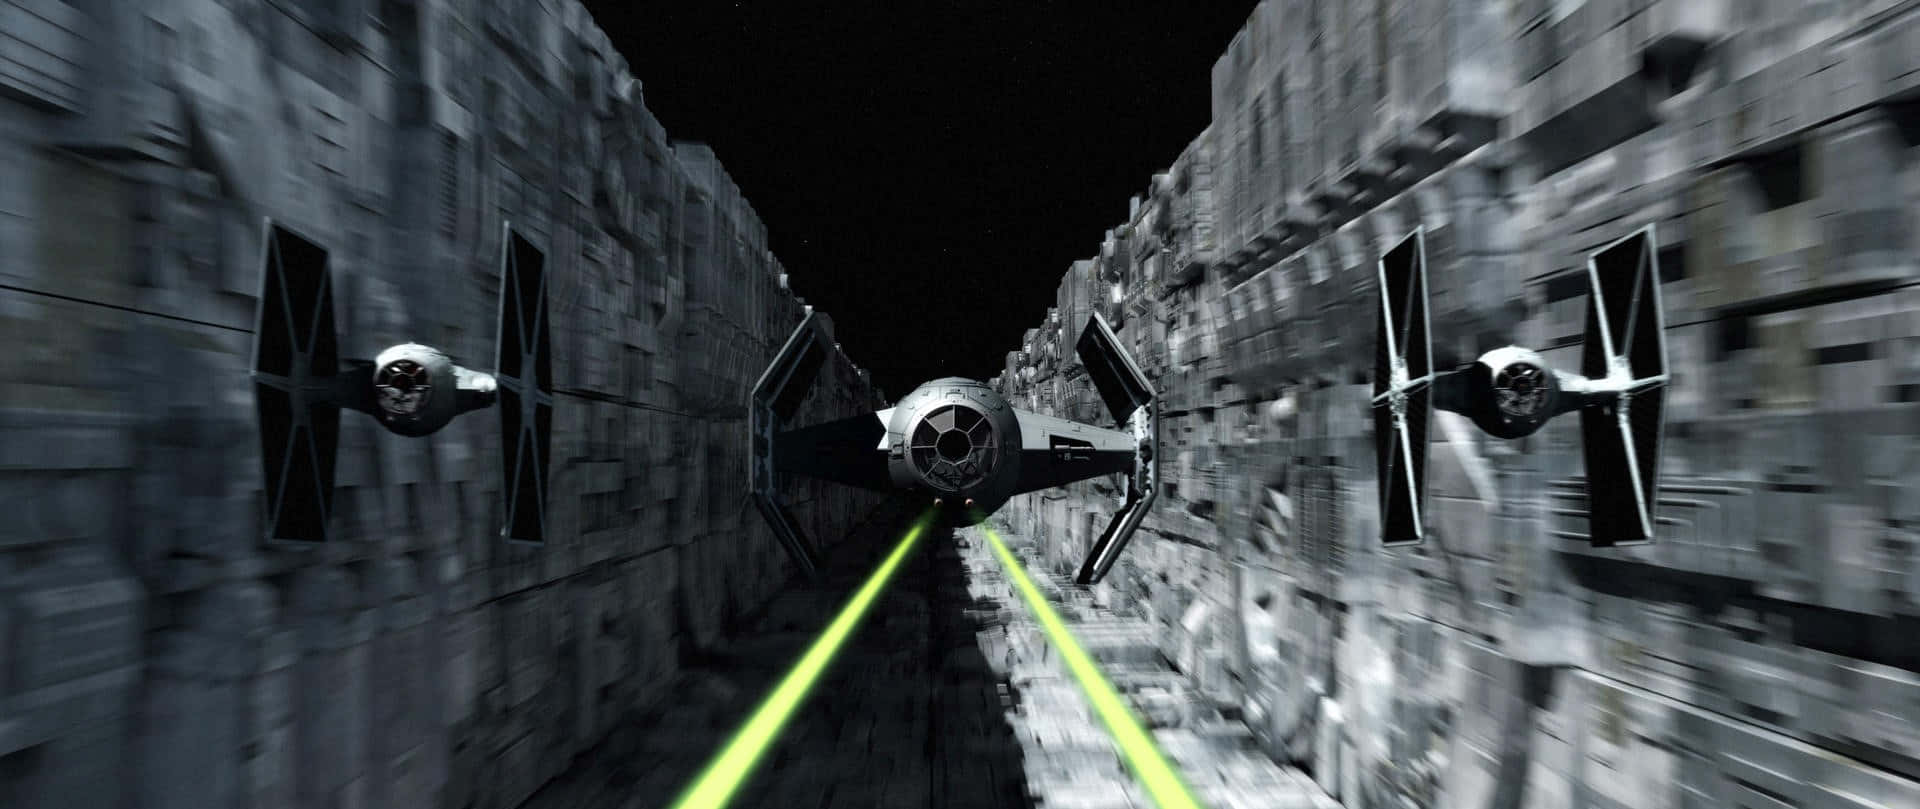 Luke Skywalker Works to Destroy The Death Star in The Trench Run Wallpaper